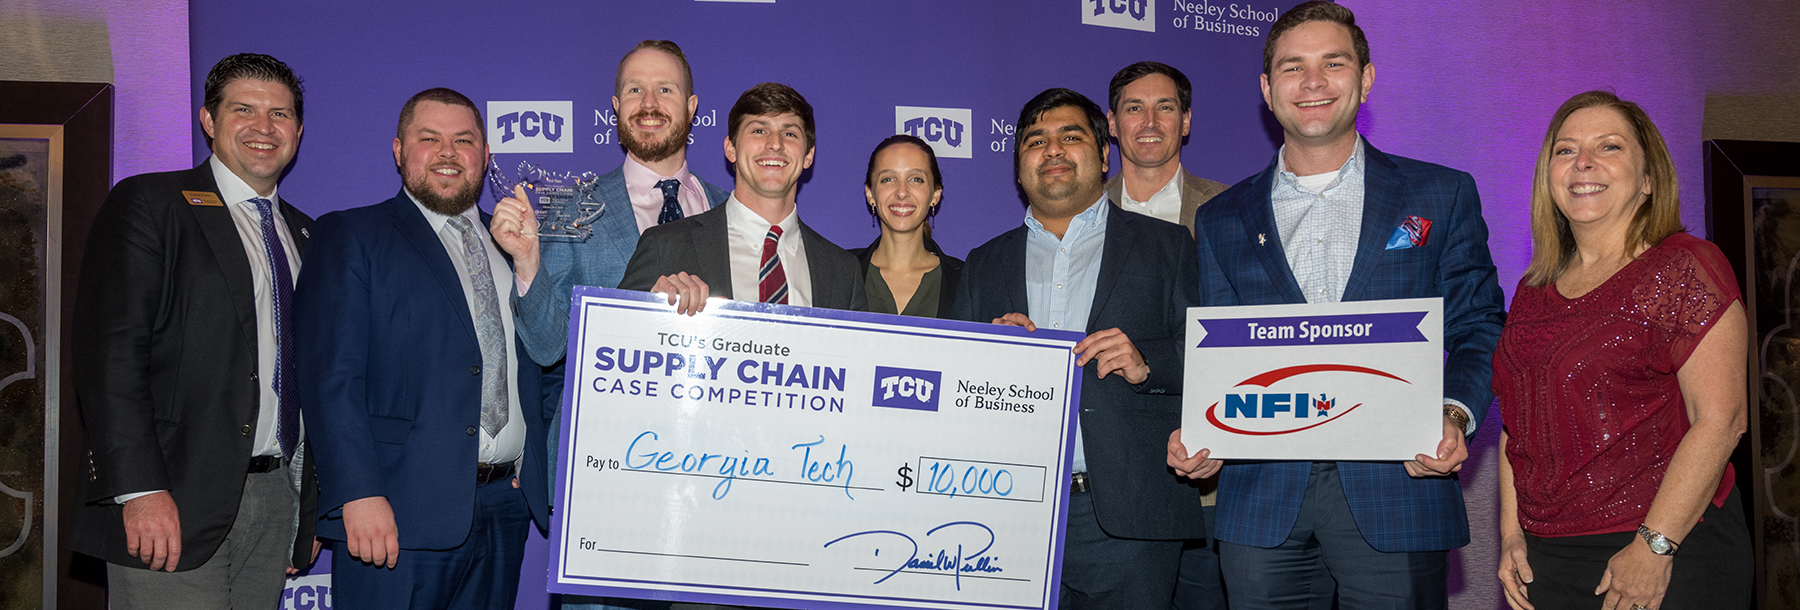 University Team Wins Prestigious Supply Chain Contest with